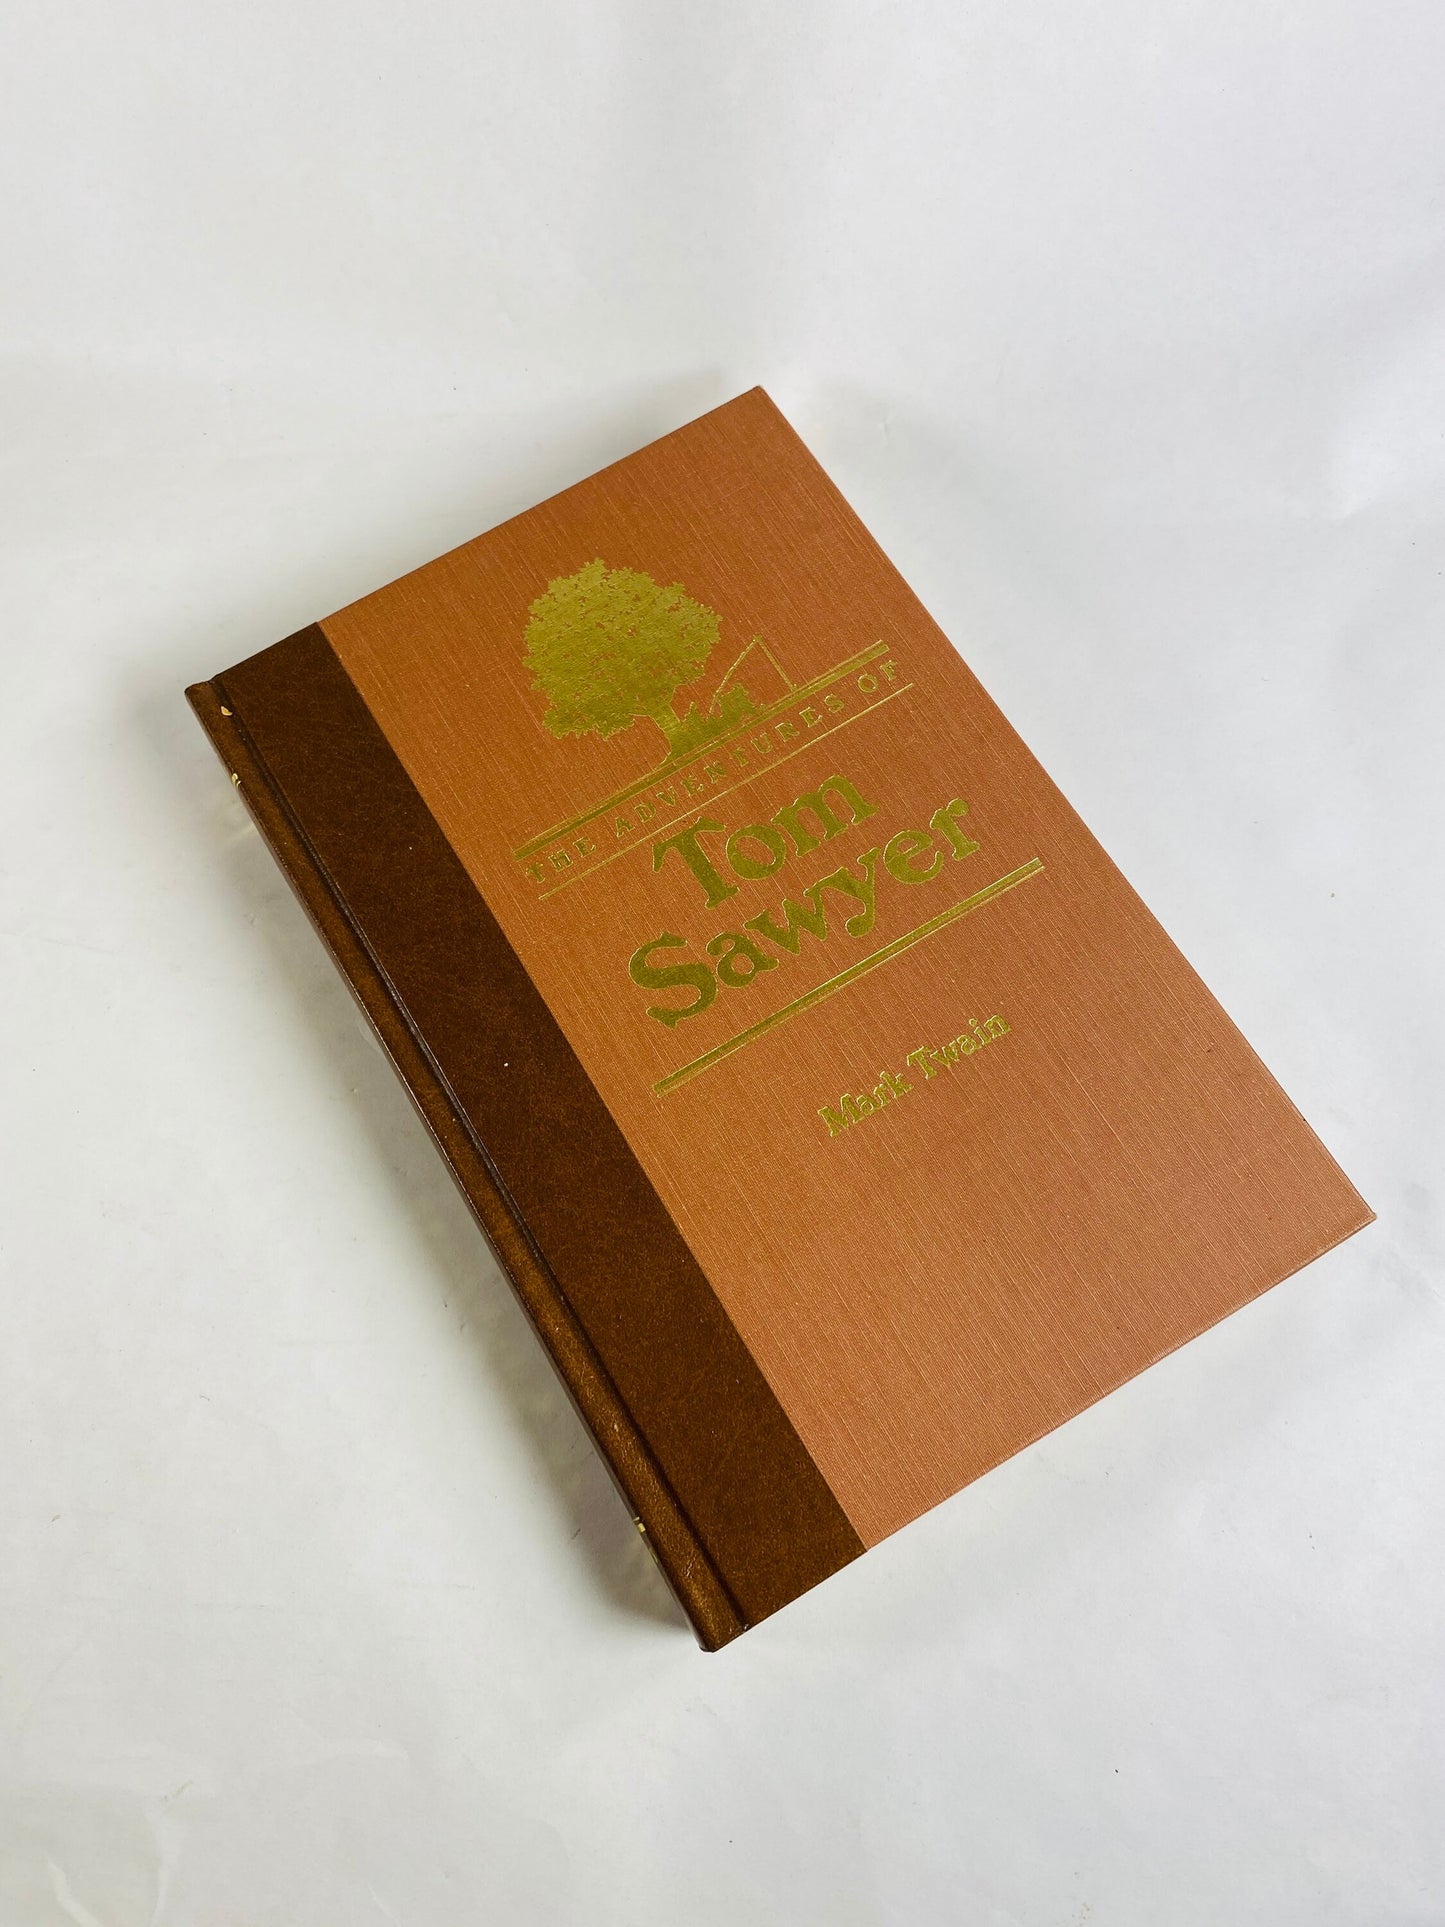 Adventures of Tom Sawyer by Samuel Clemens Mark Twain Vintage Reader's Digest book circa 1986. Brown & gold bookshelf decor